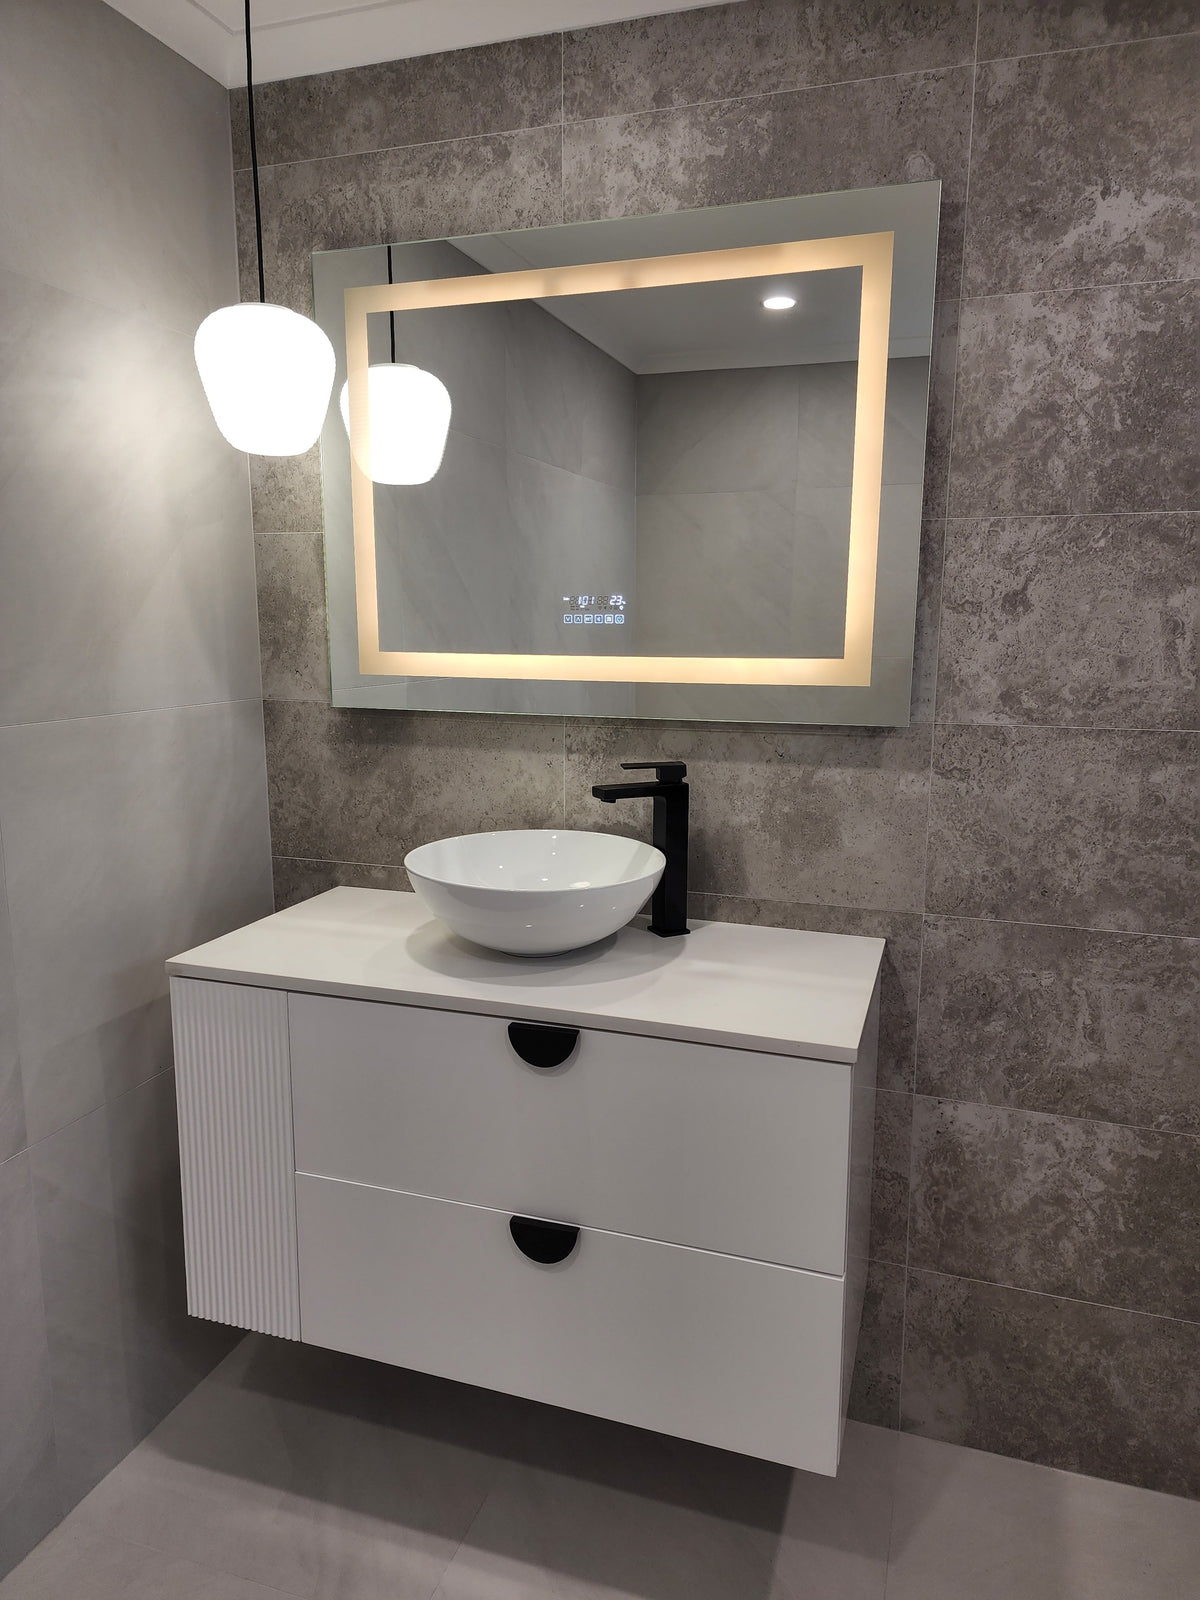 Stylish Vanity Corner in Greyish Beige Bathroom